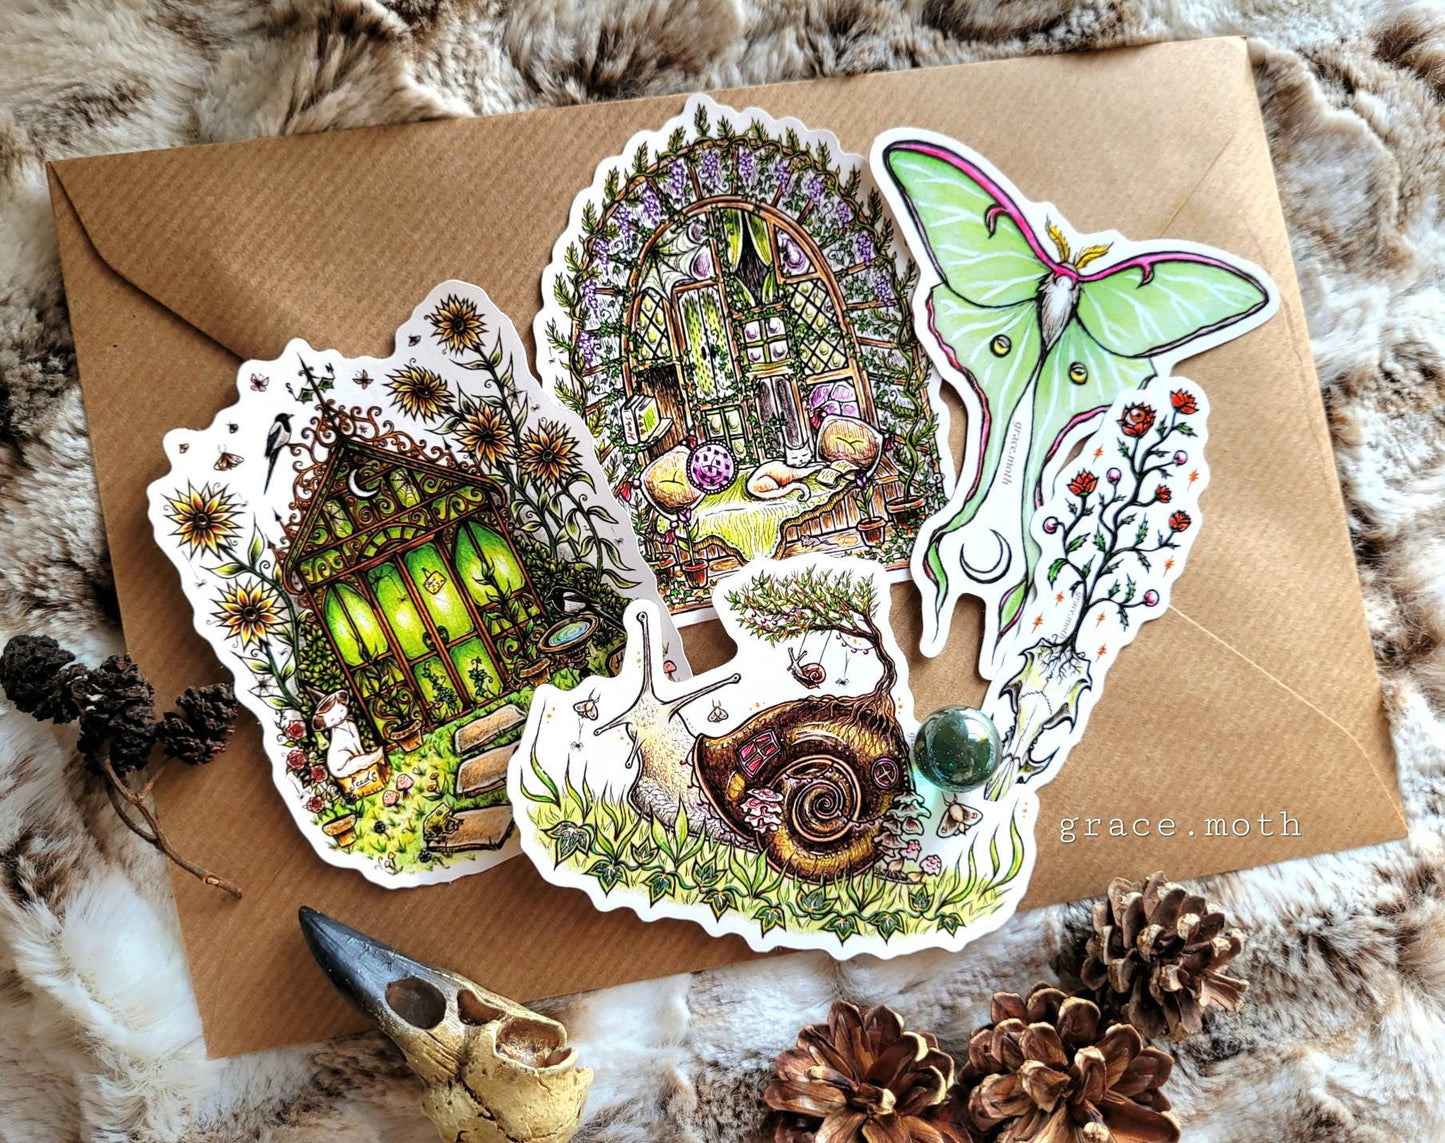 Cottagecore set 1 - Vinyl Sticker Bundle 10cm - Illustrated by Grace moth. Magic, luna moth, green witch, snail house, moss, fantasy